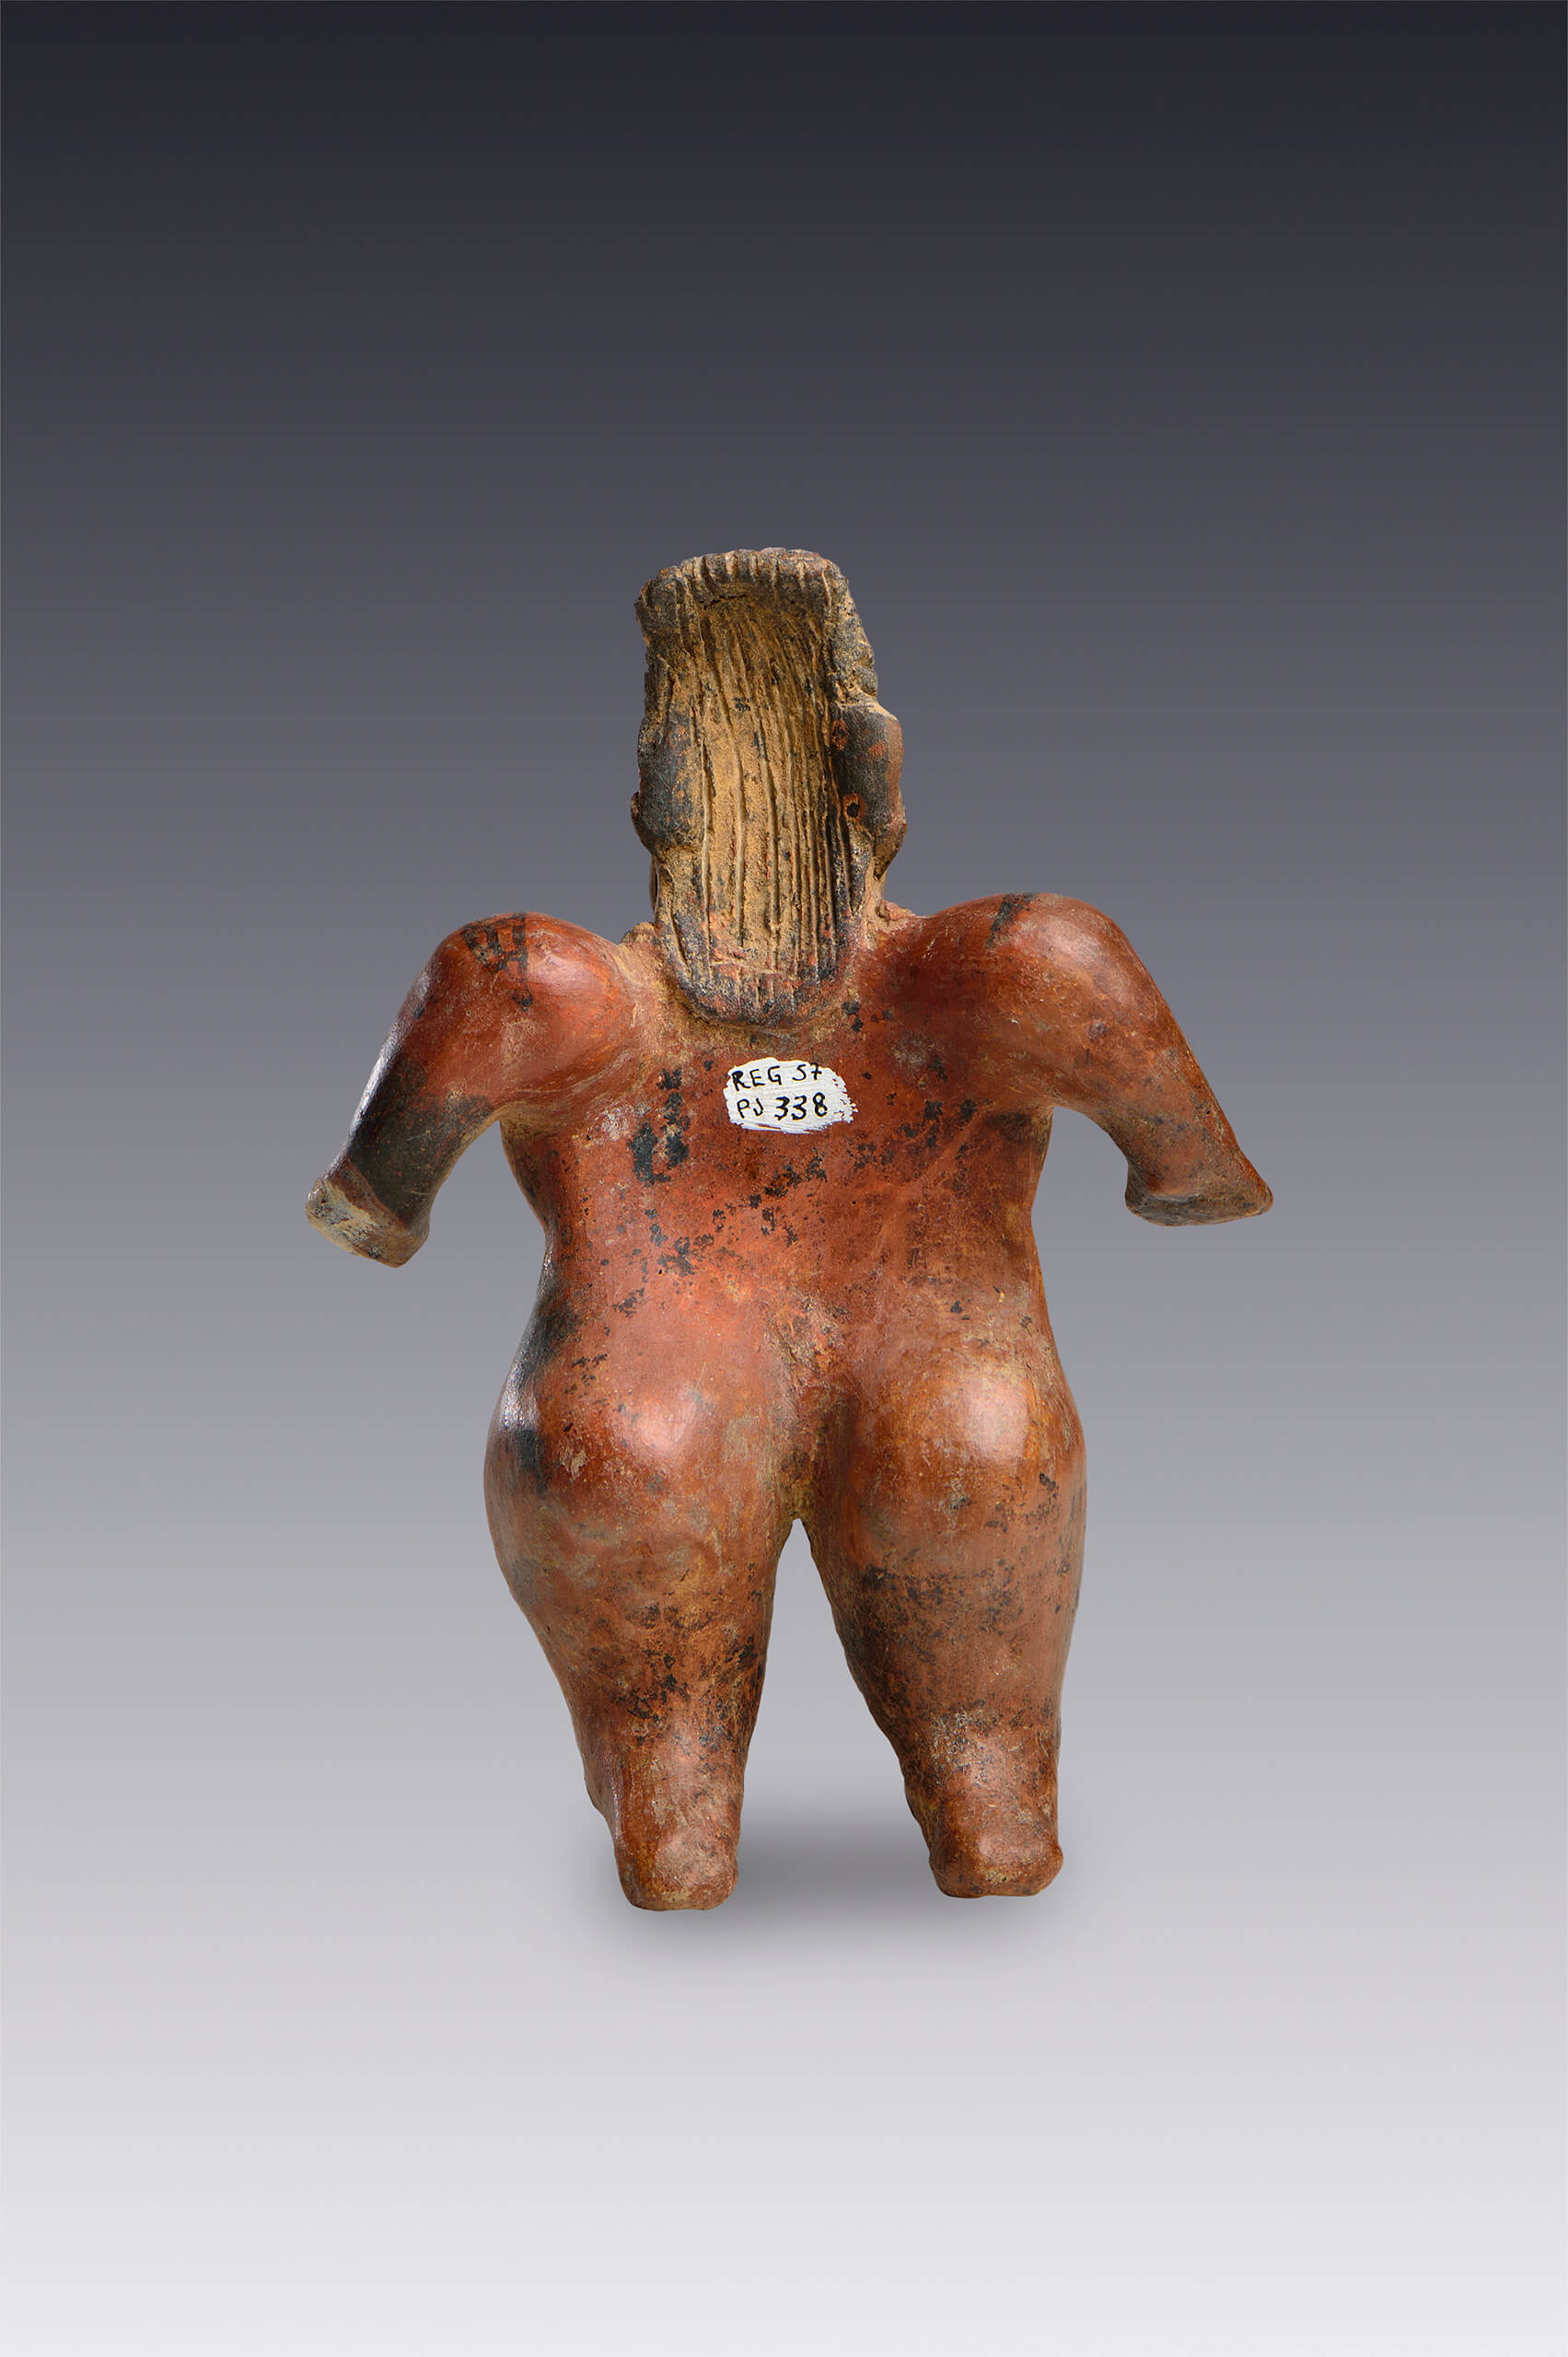 Desnudo femenino | El México antiguo. Salas de Arte Prehispánico | Museo Amparo, Puebla